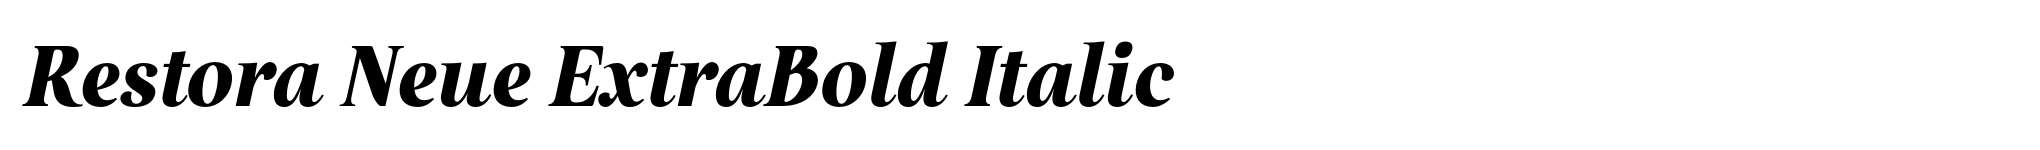 Restora Neue ExtraBold Italic image